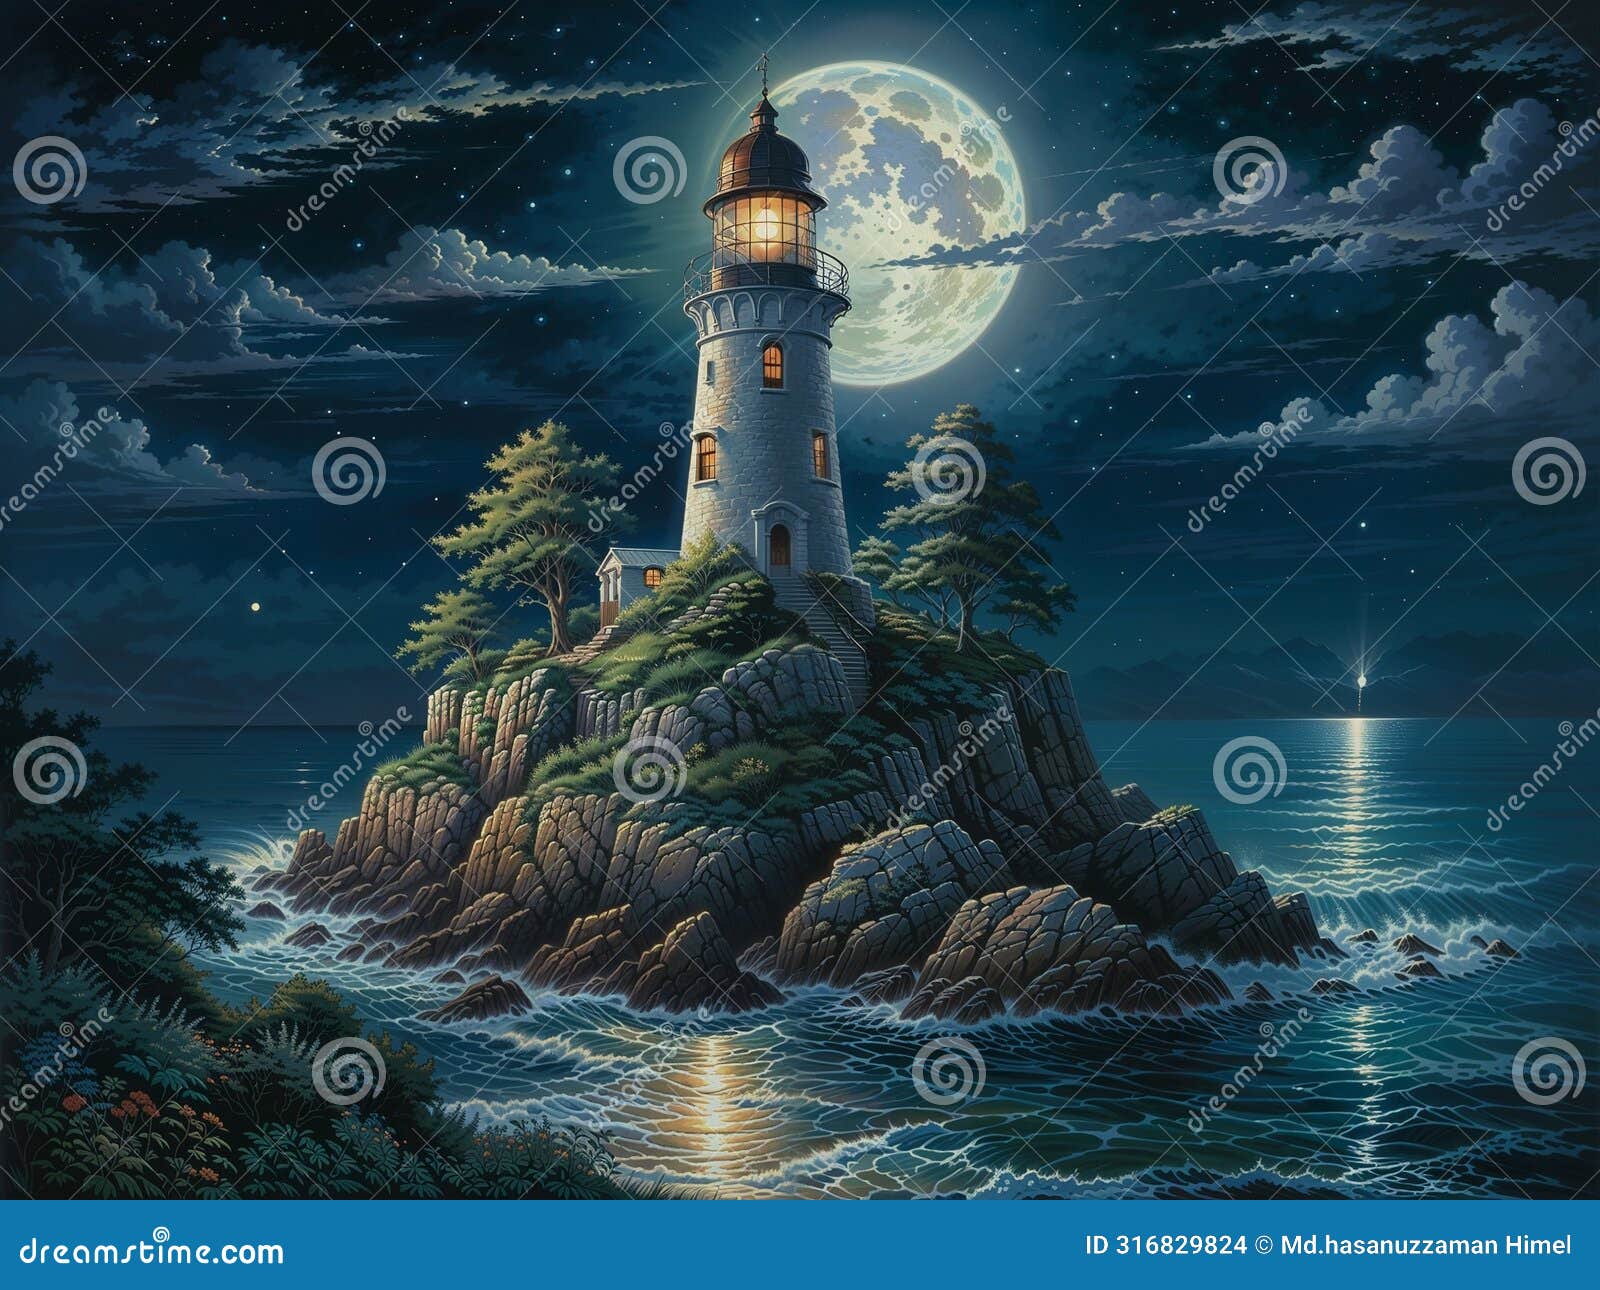 luminescent guardian: moonlit lighthouse